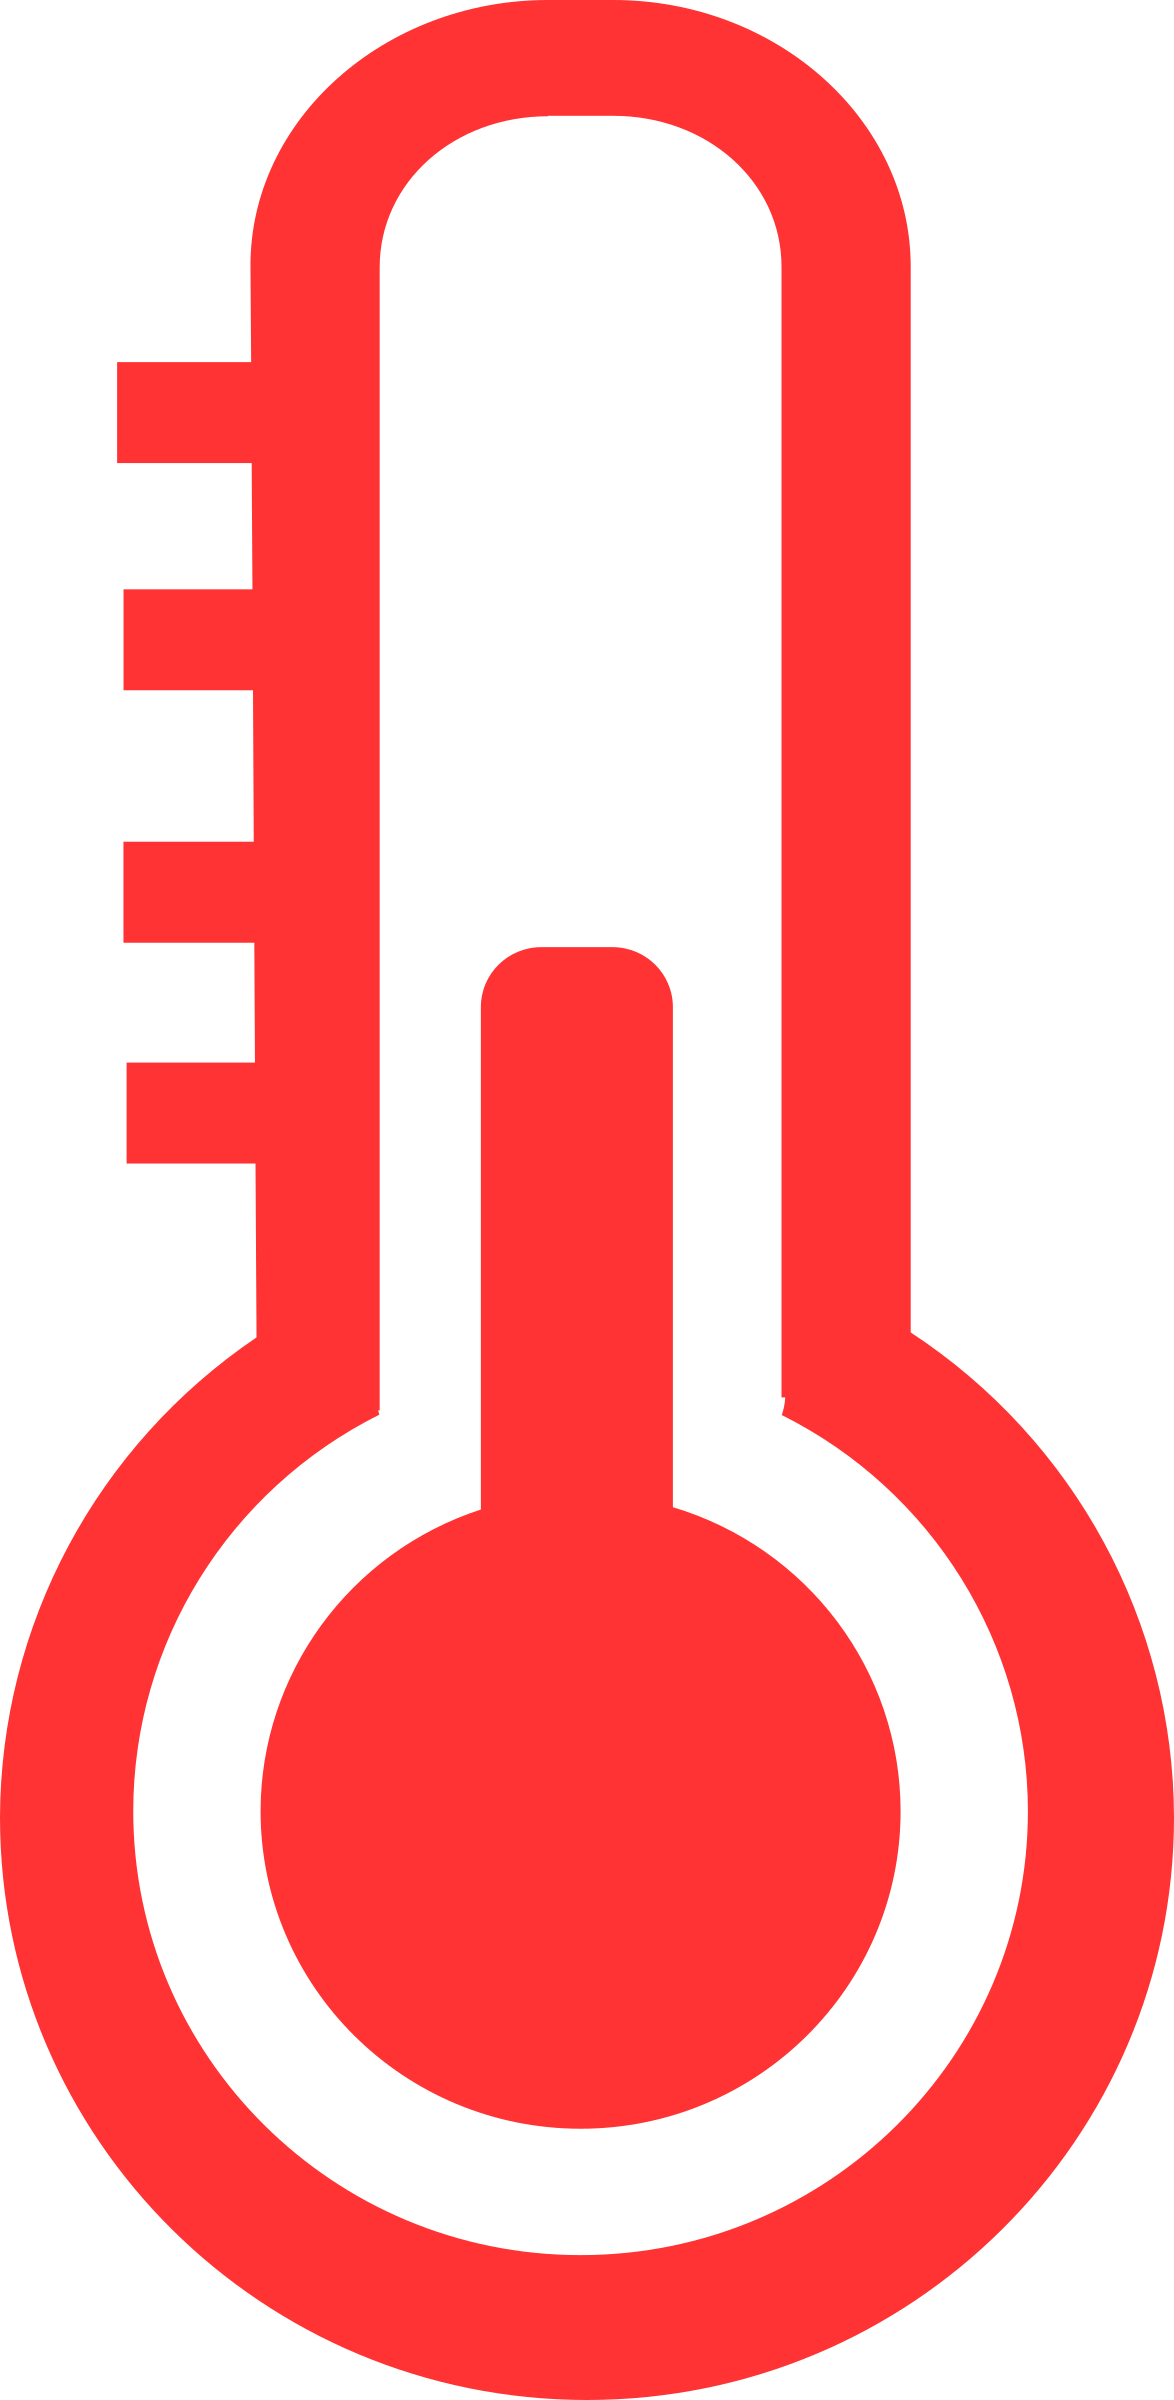 Hypothalamus - Red Thermometer Icon (1174x2400)